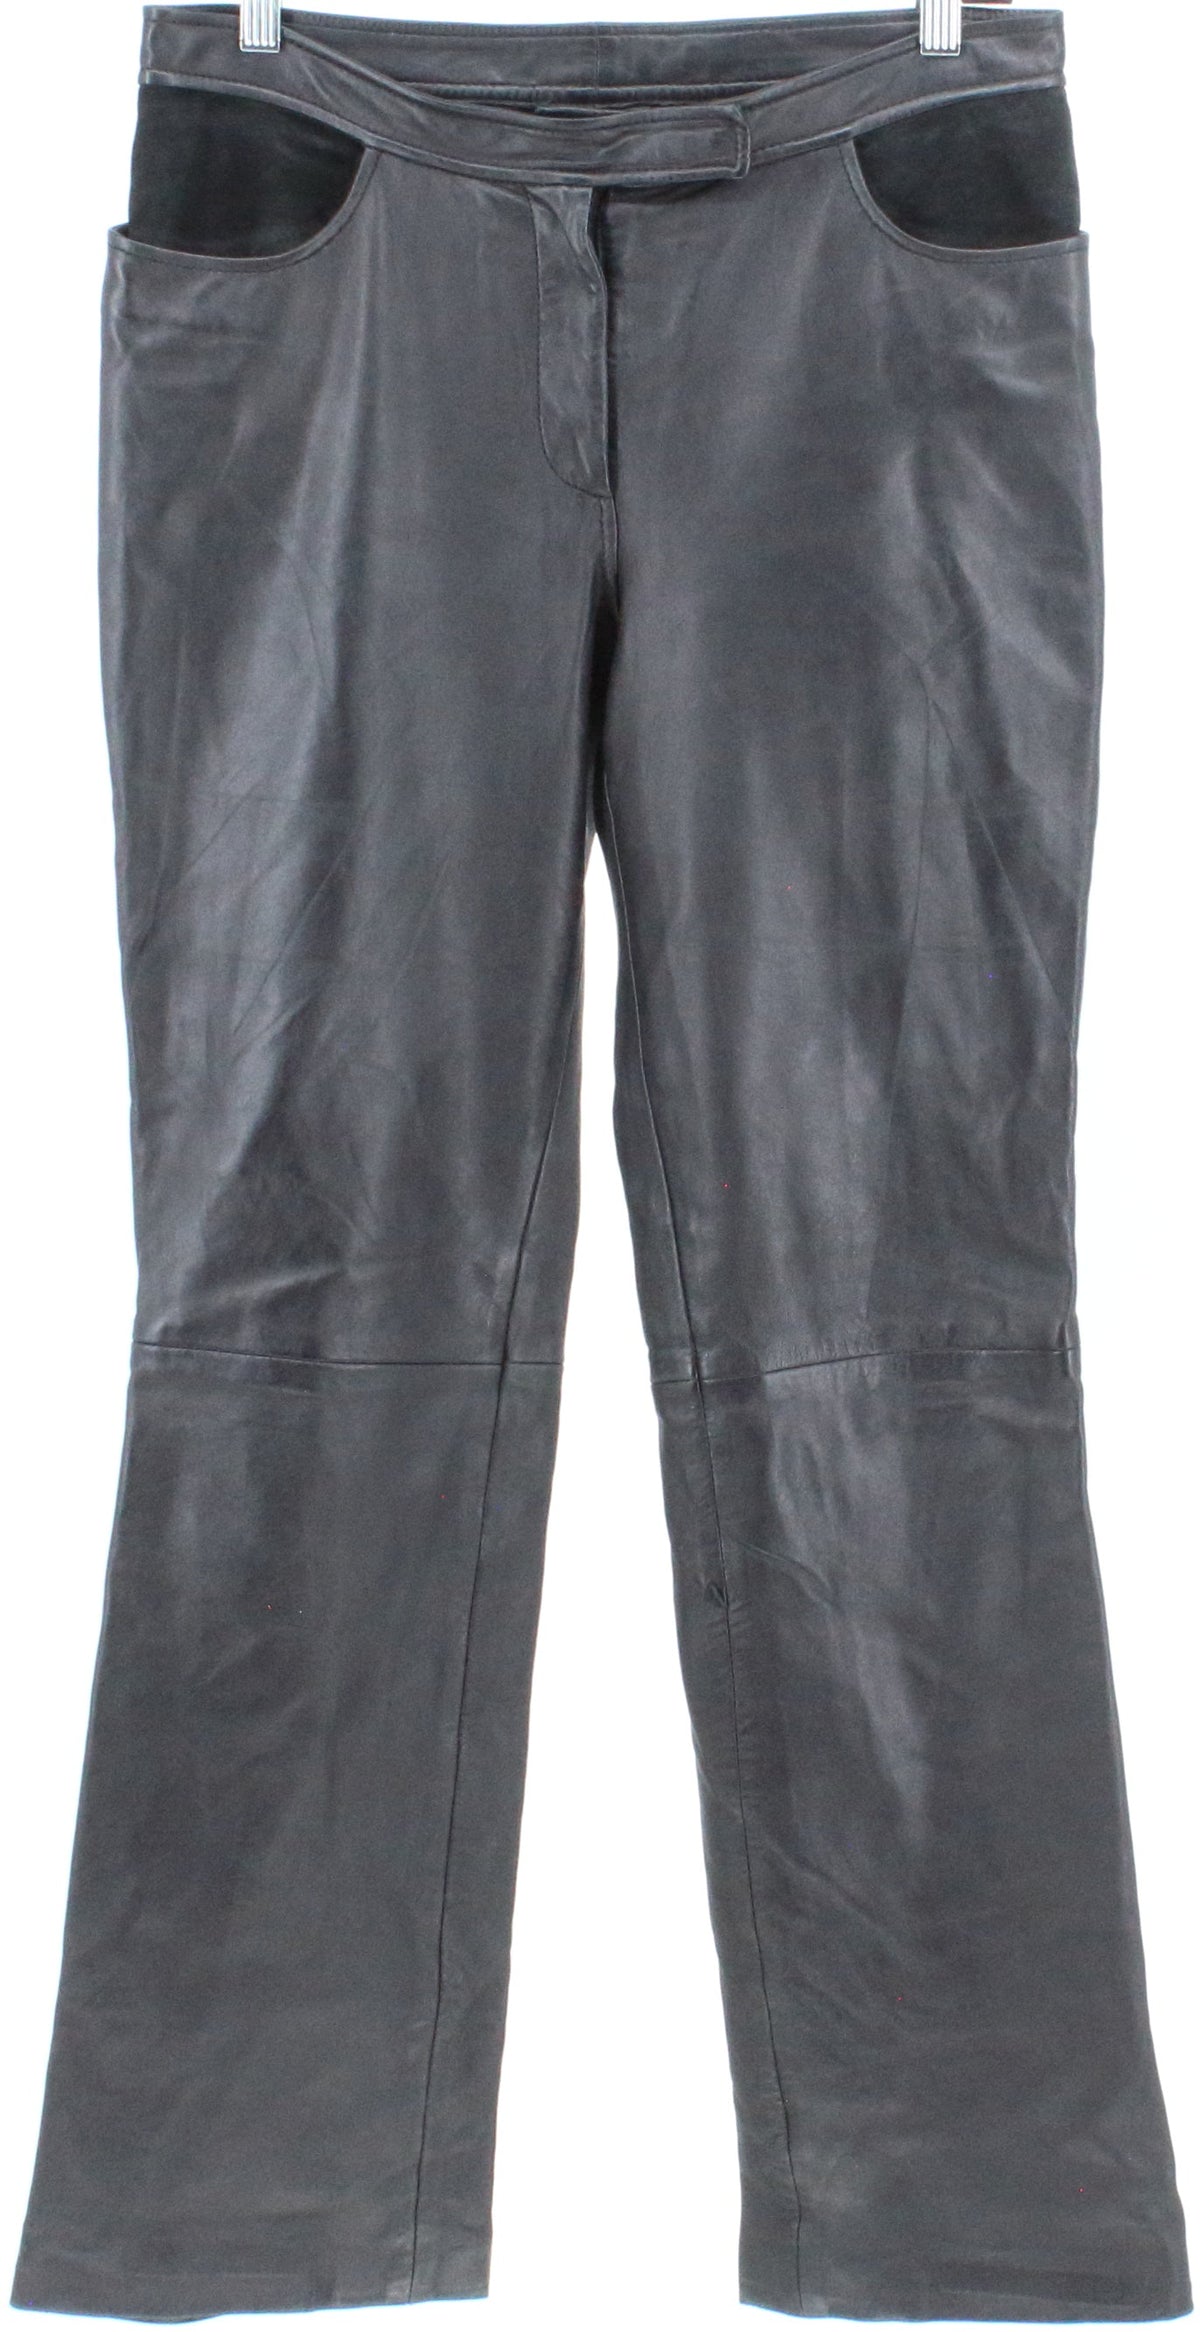 DKNY Black Leather Pants